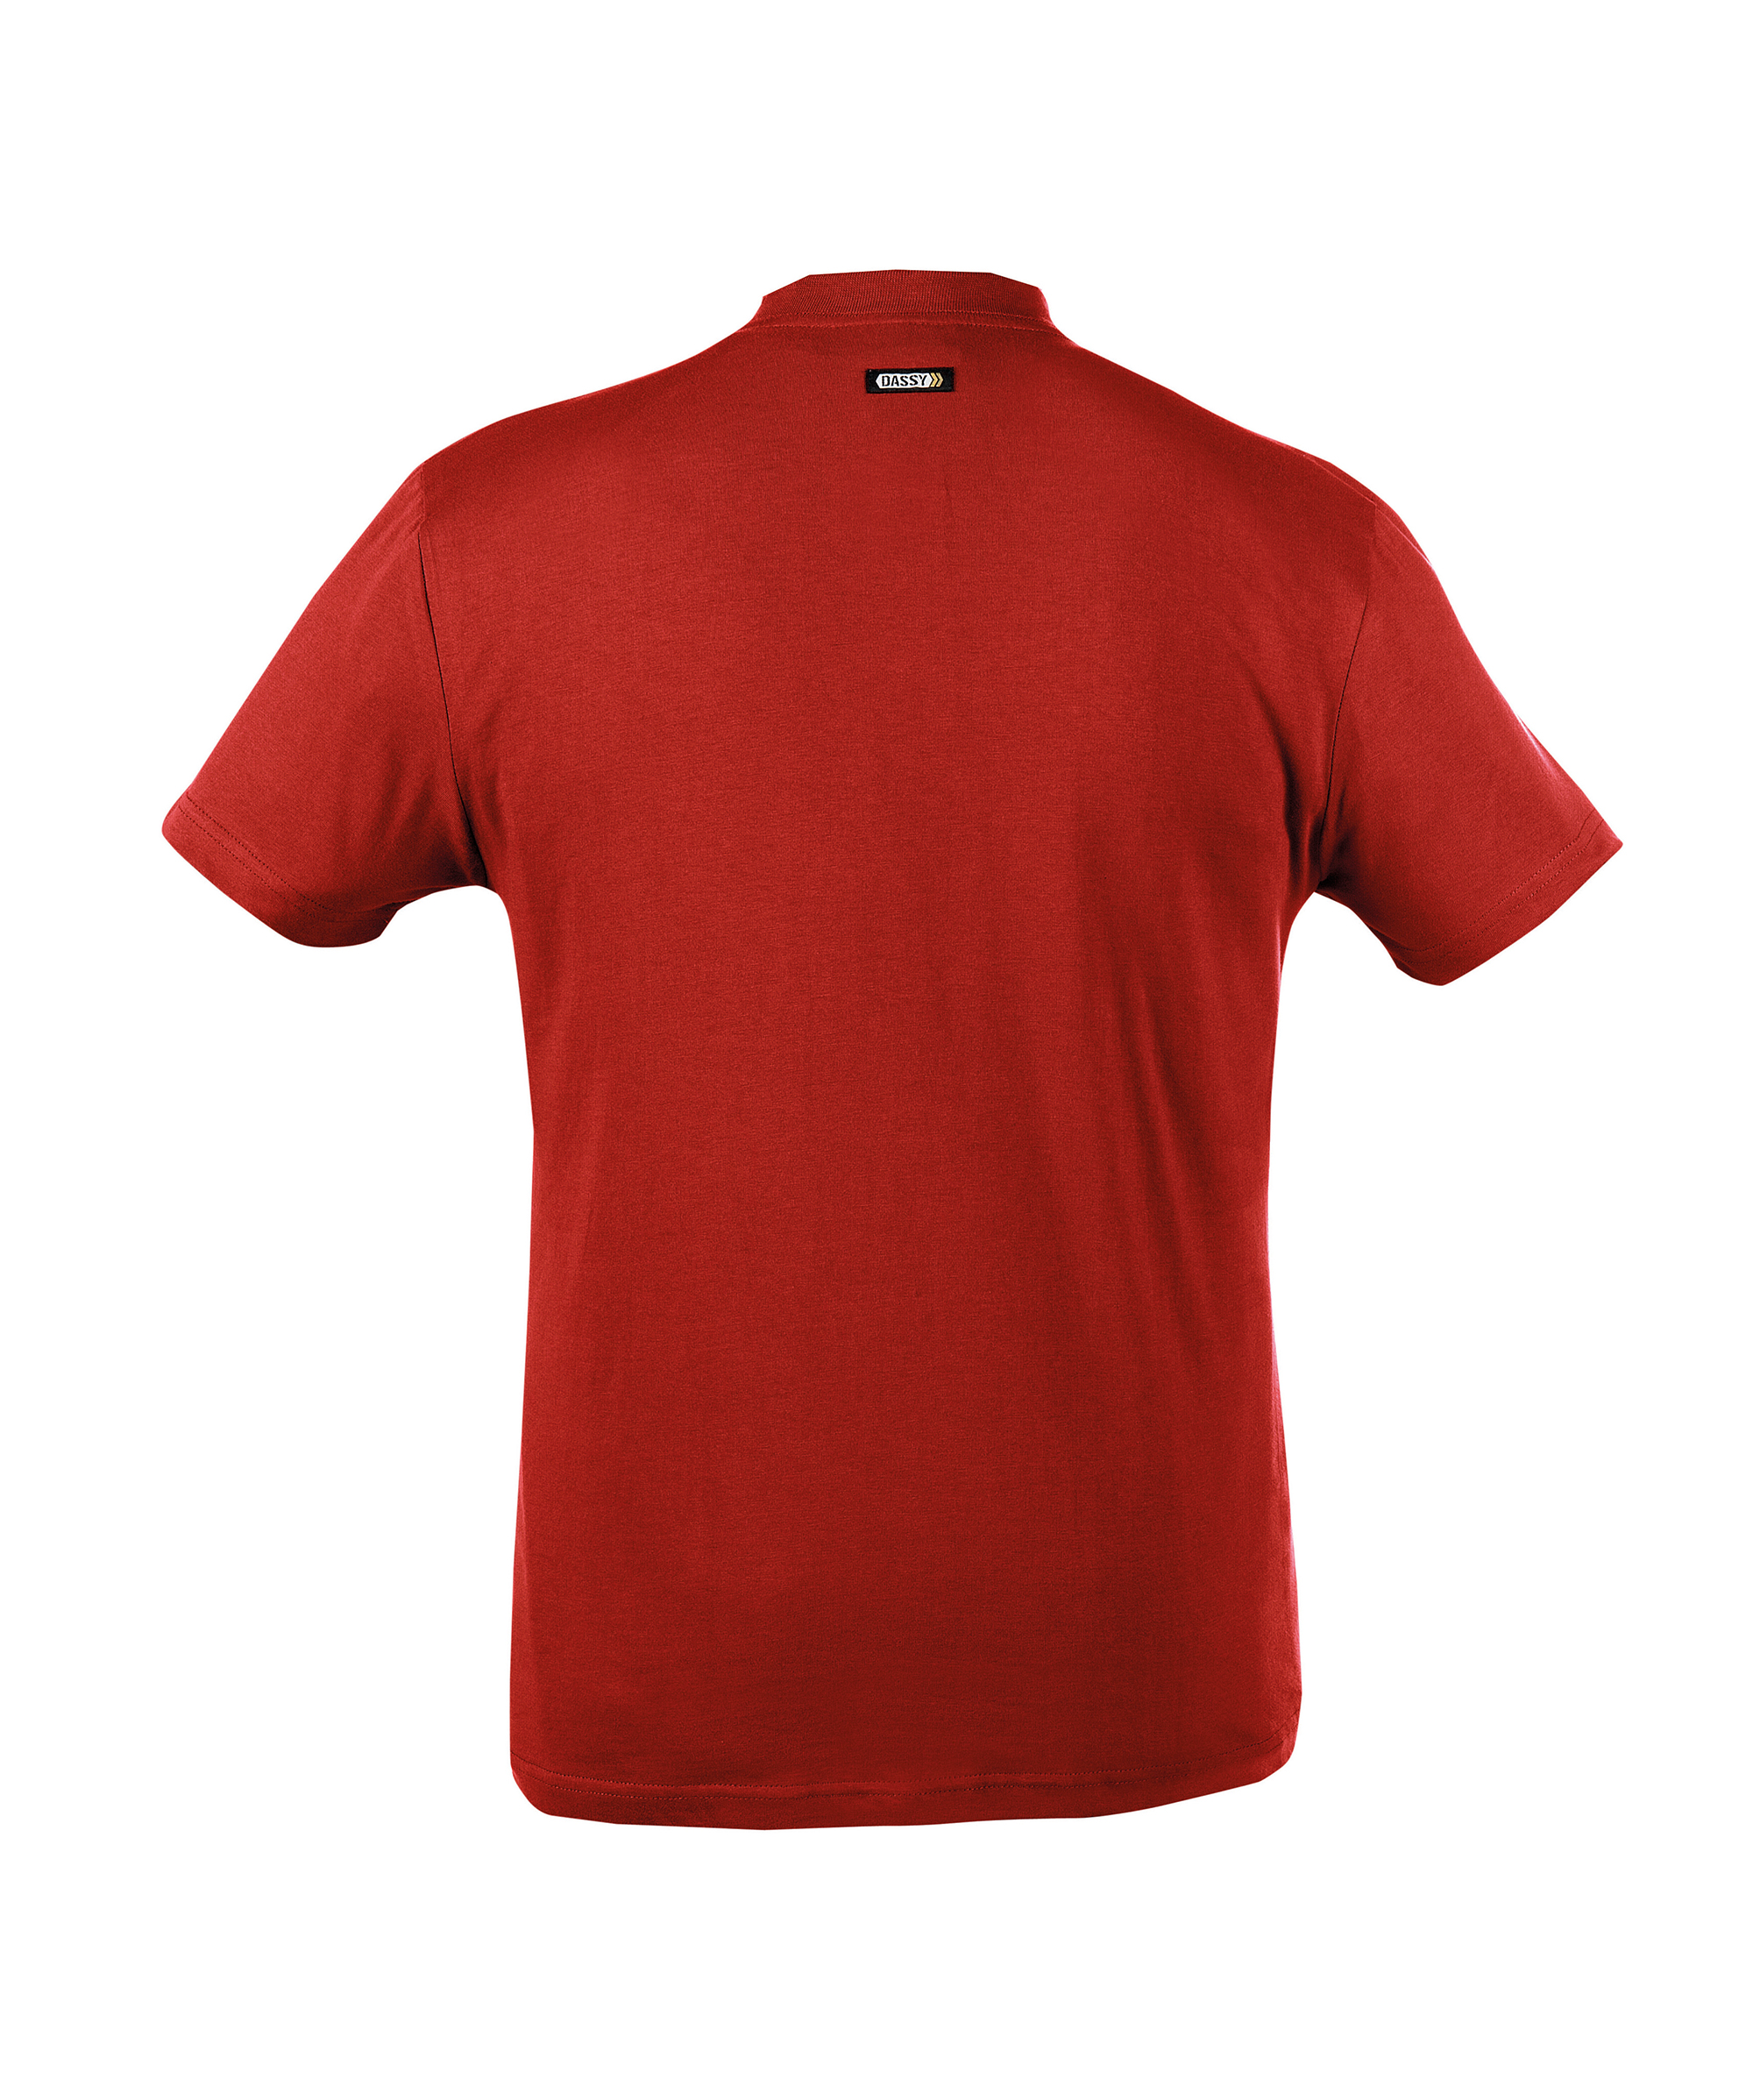 oscar_t-shirt_red_back.jpg